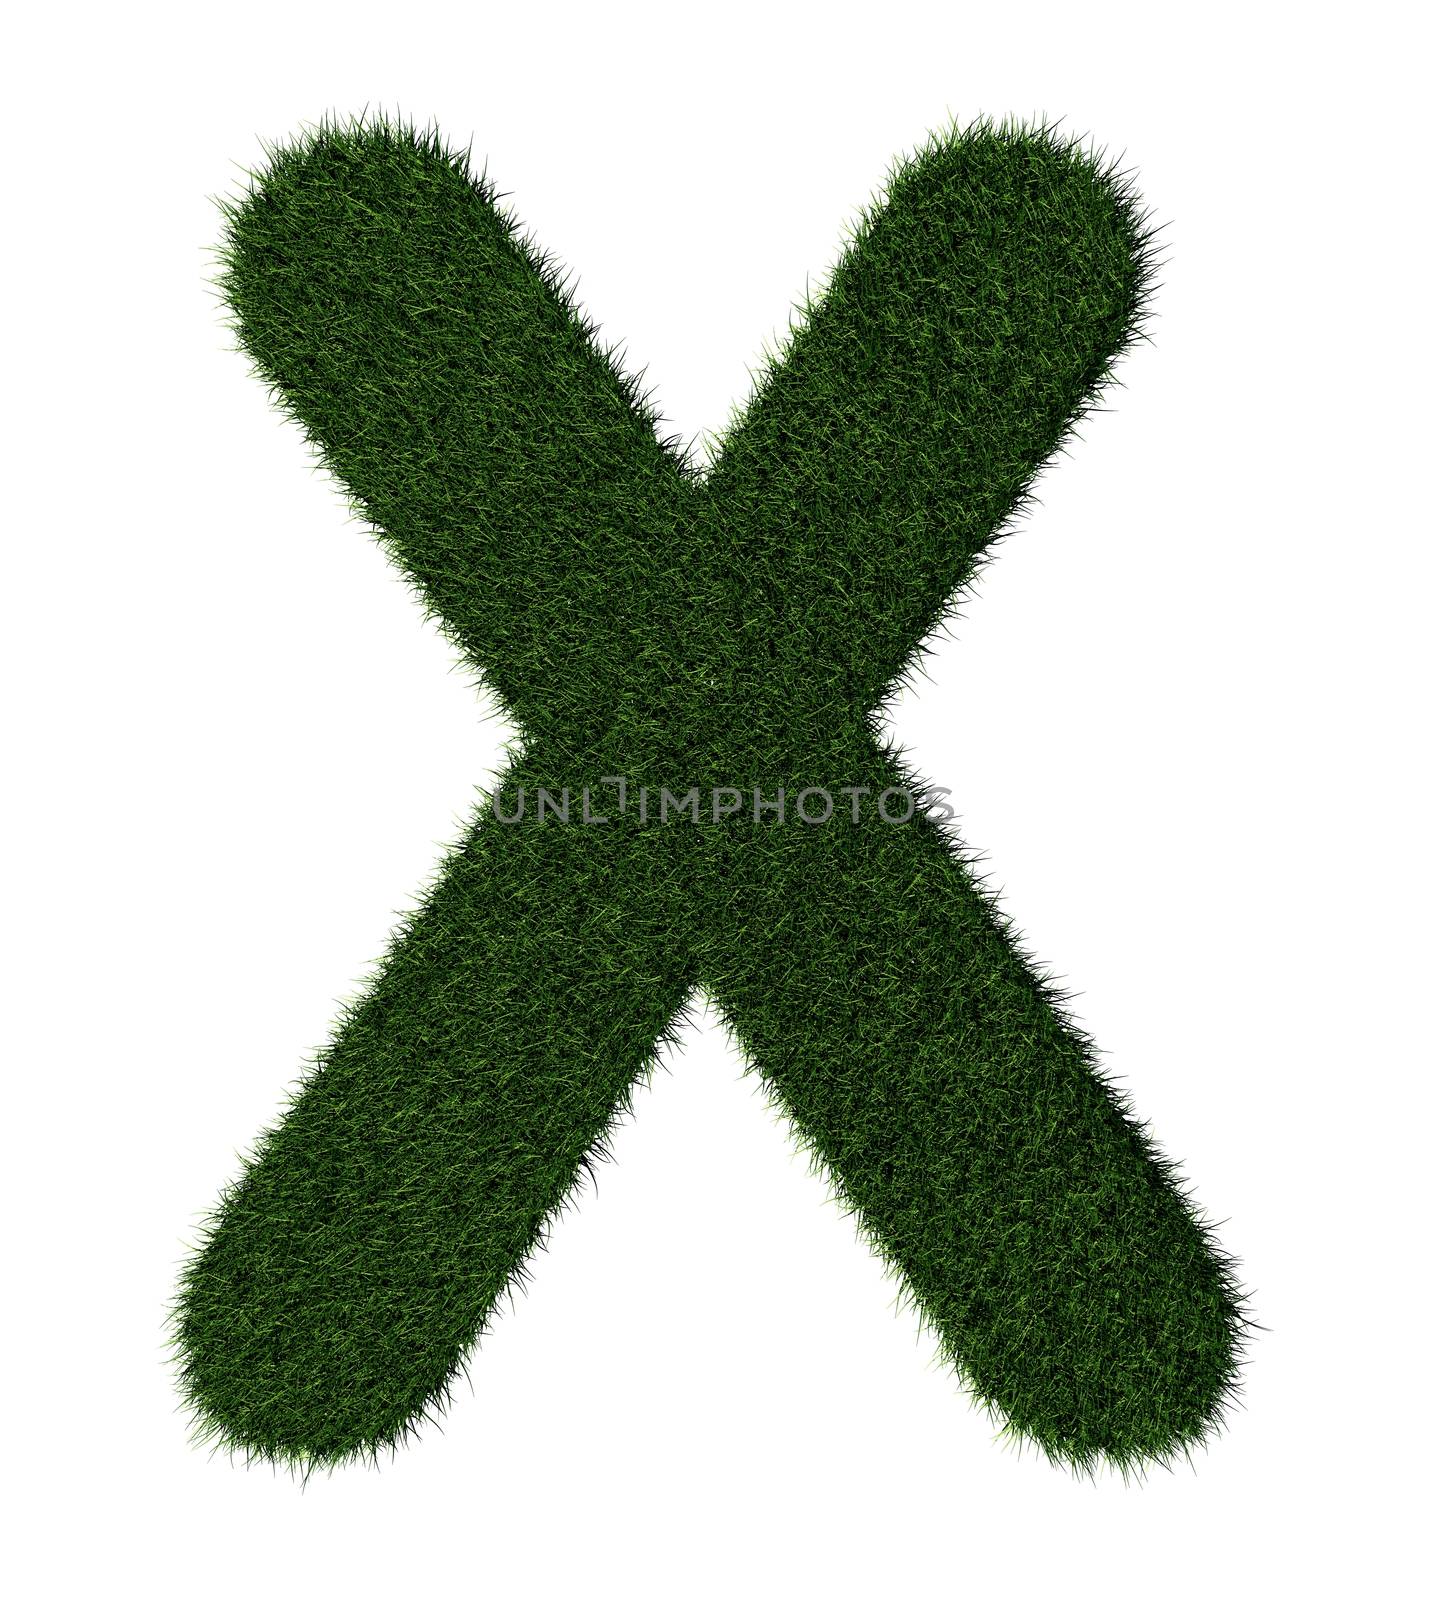 Grass alphabet - X by midani